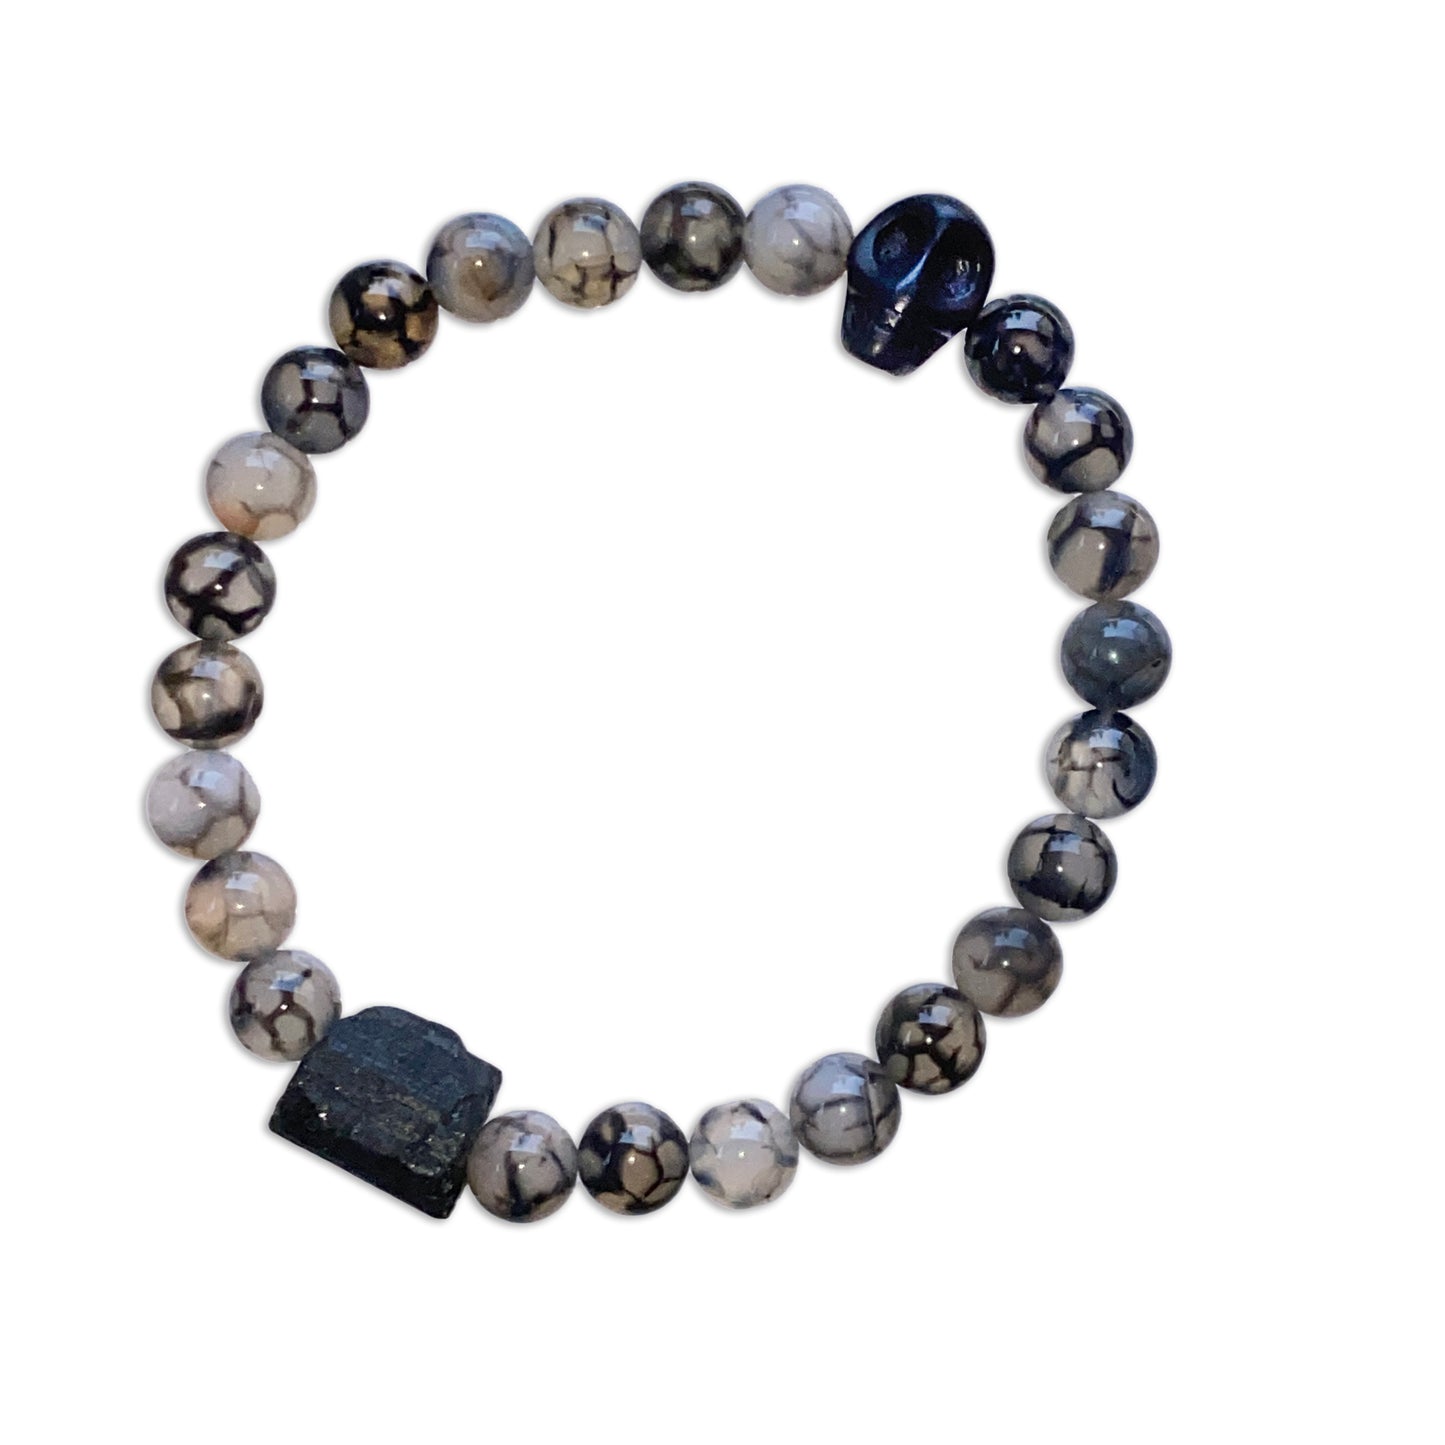 Dragon’s Vein Agate and Black Tourmaline gemstone stretch bracelet